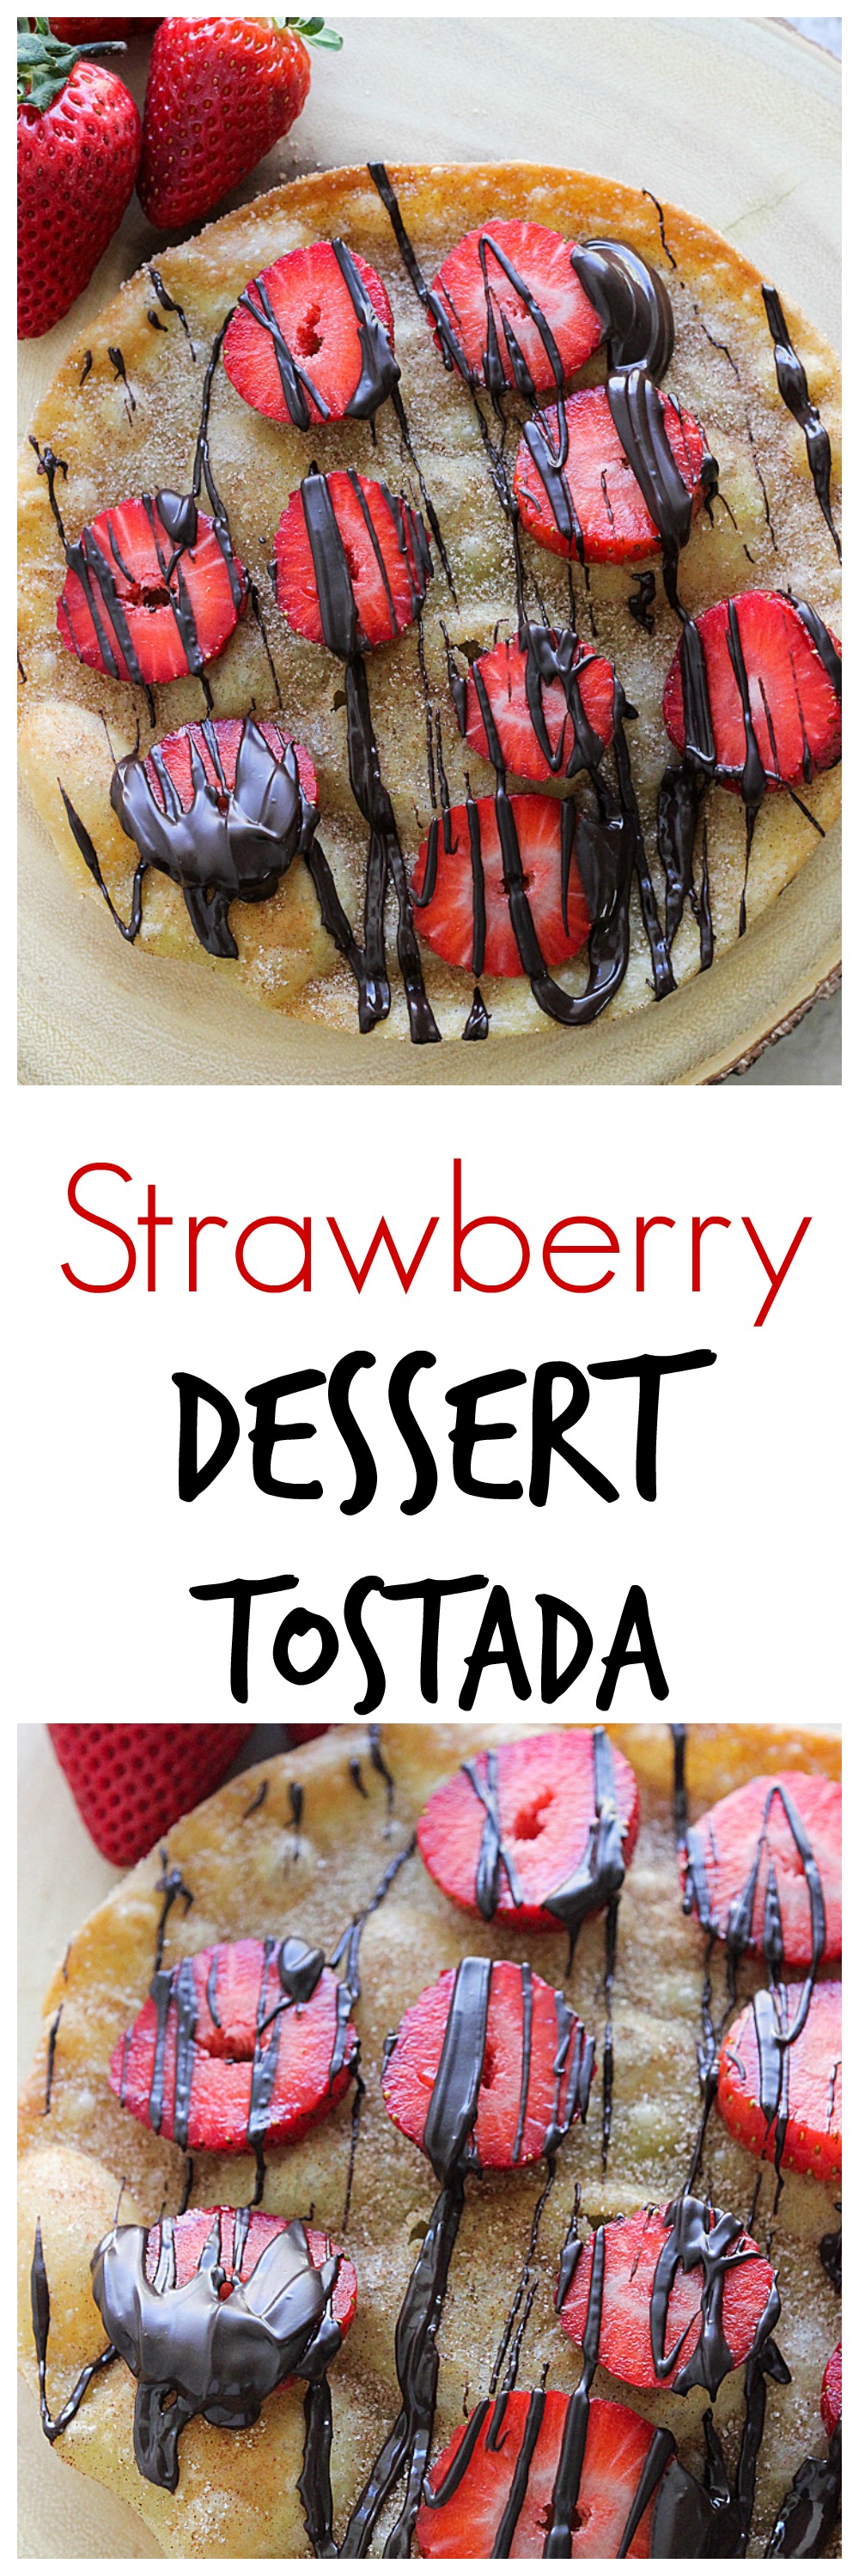 Strawberry Dessert Tostada